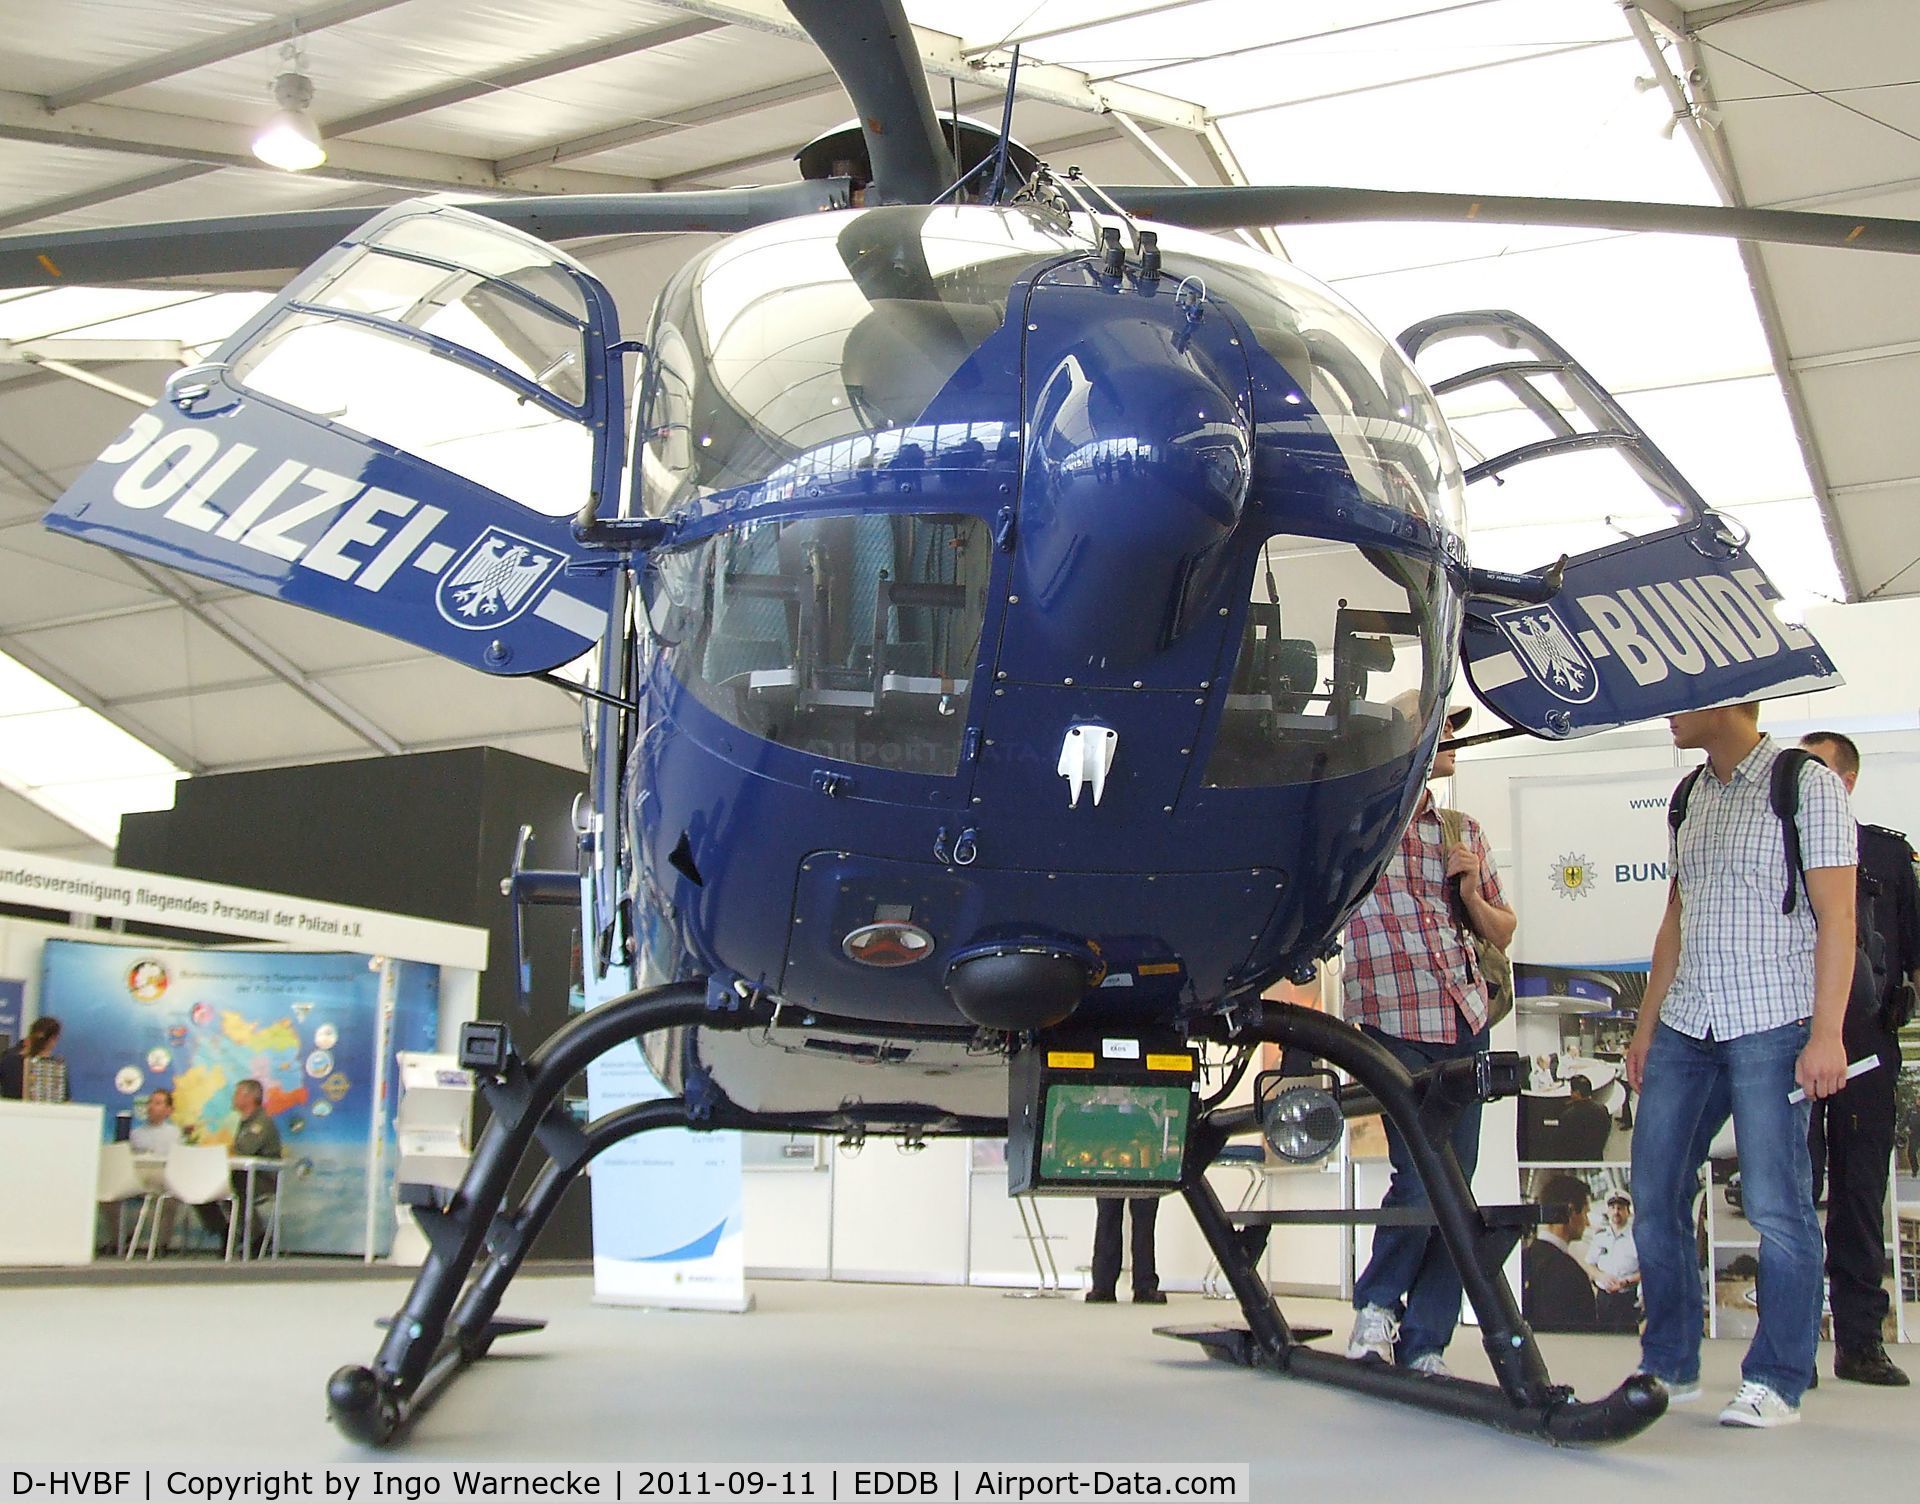 D-HVBF, Eurocopter EC-135T-2i C/N 0171, Eurocopter EC135T-2i of the German federal police(Bundespolizei) at the ILA 2012, Berlin